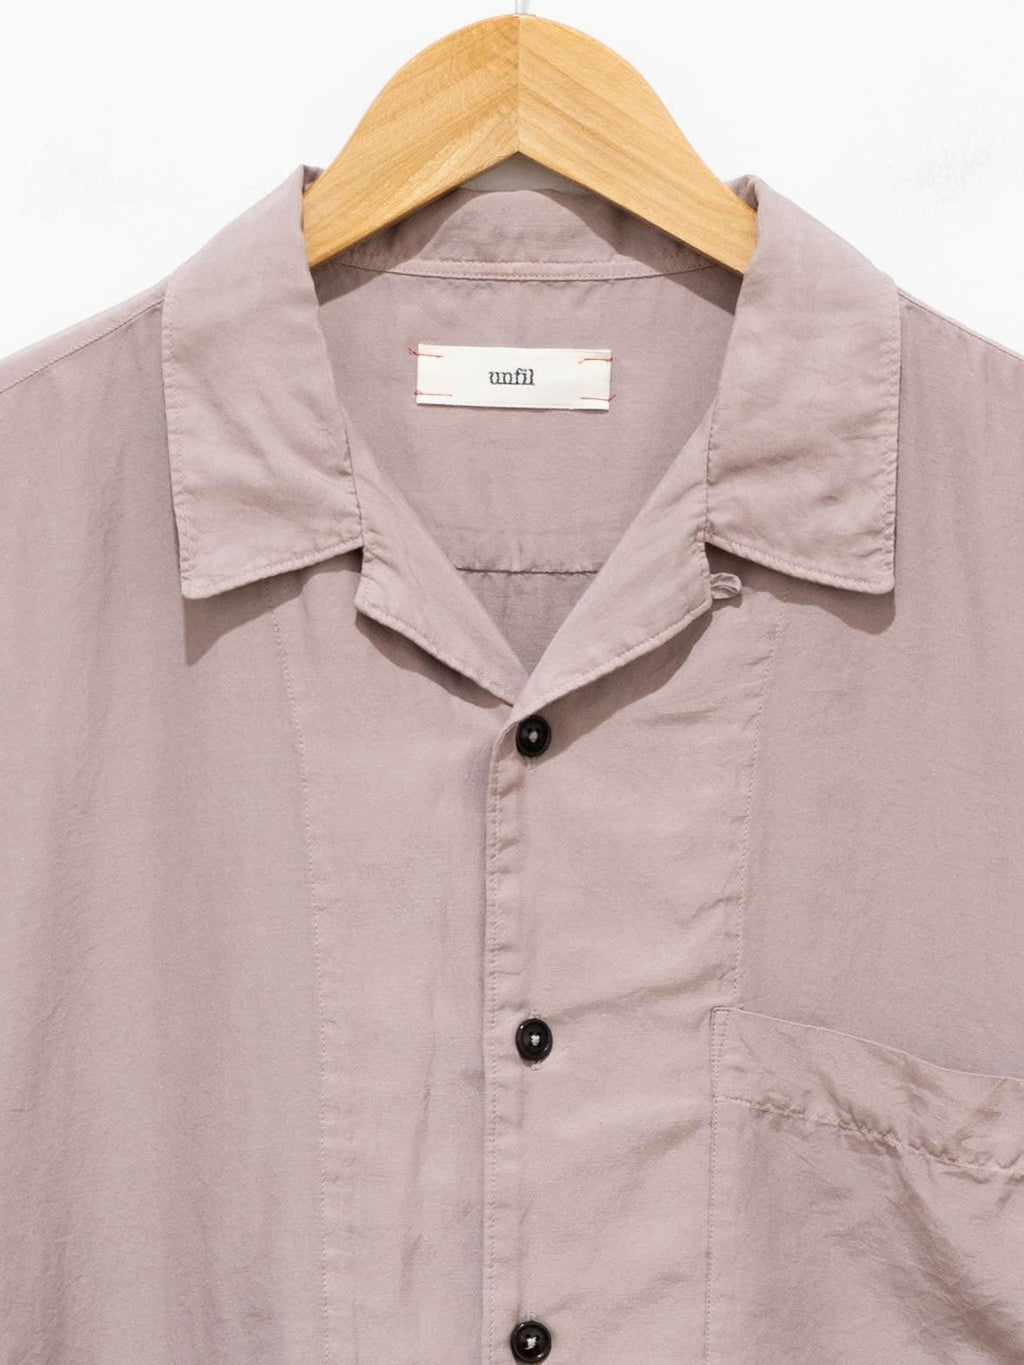 Namu Shop - Unfil Cotton Silk Twill S/S Shirt - Lilac Gray